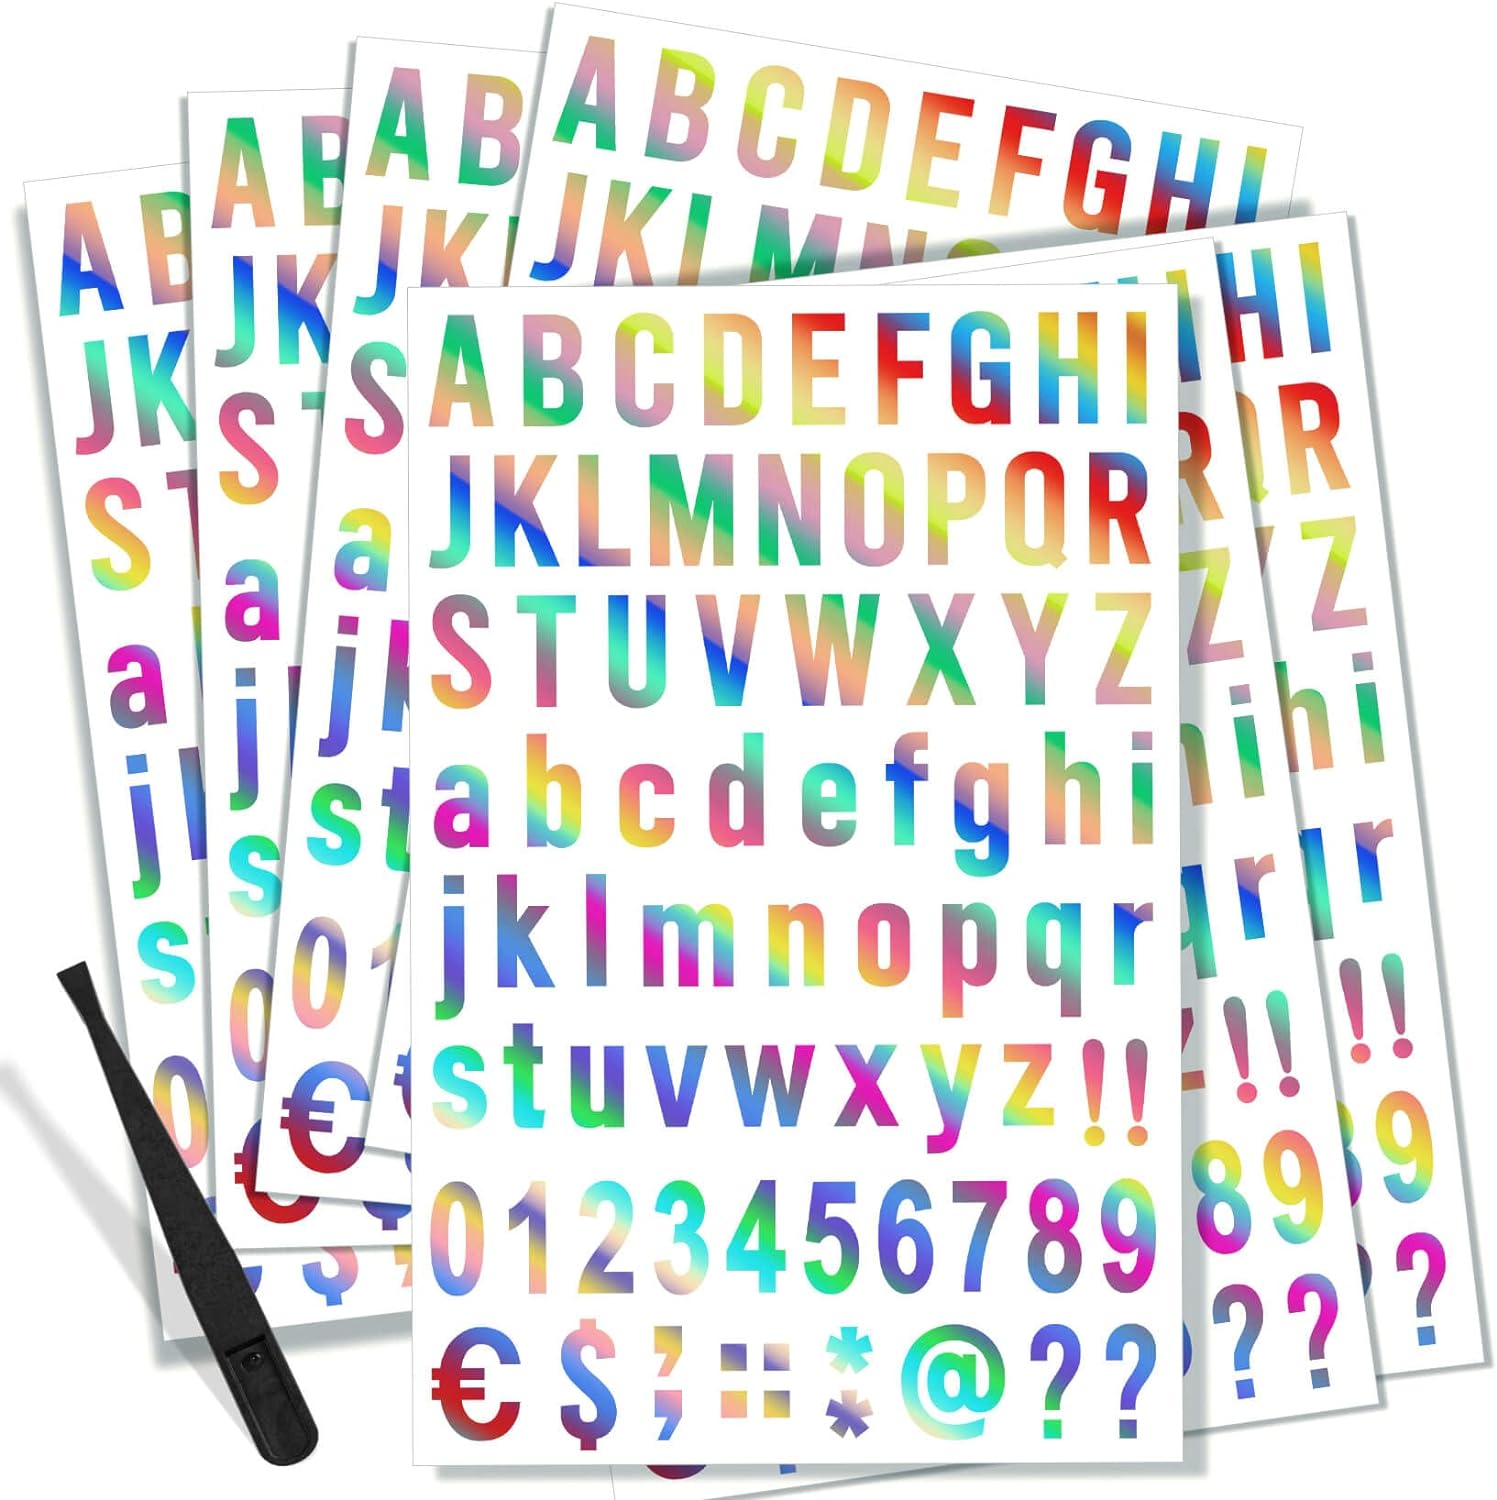 Sukh iSH09-M653021mn Vinyl Glitter Alphabet Letter Stickers - 7